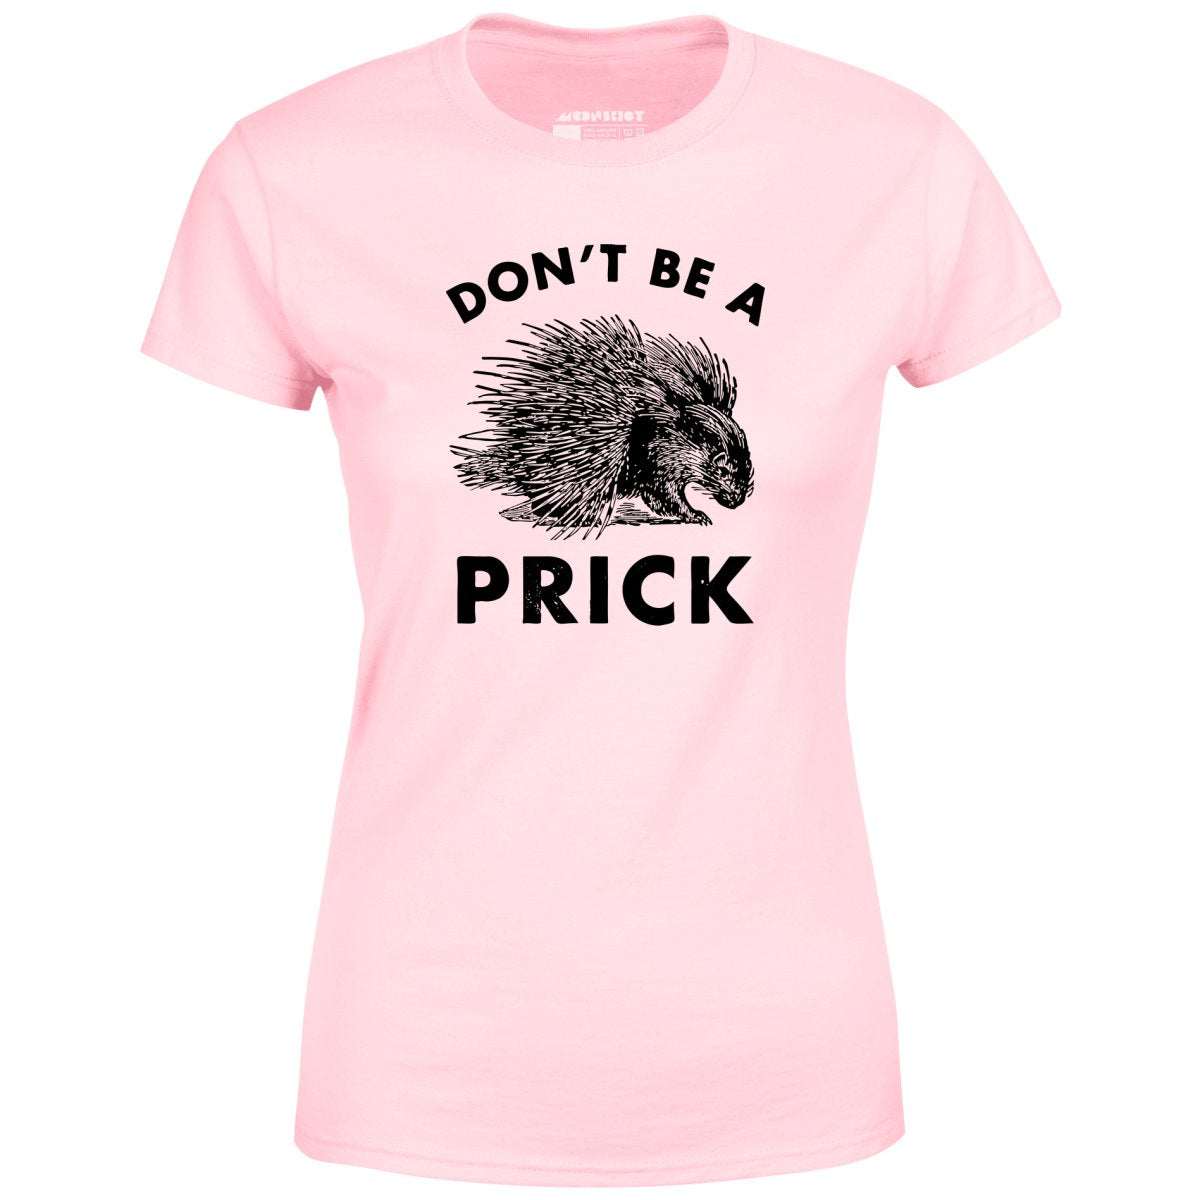 Don't Be a Prick - Women's T-Shirt